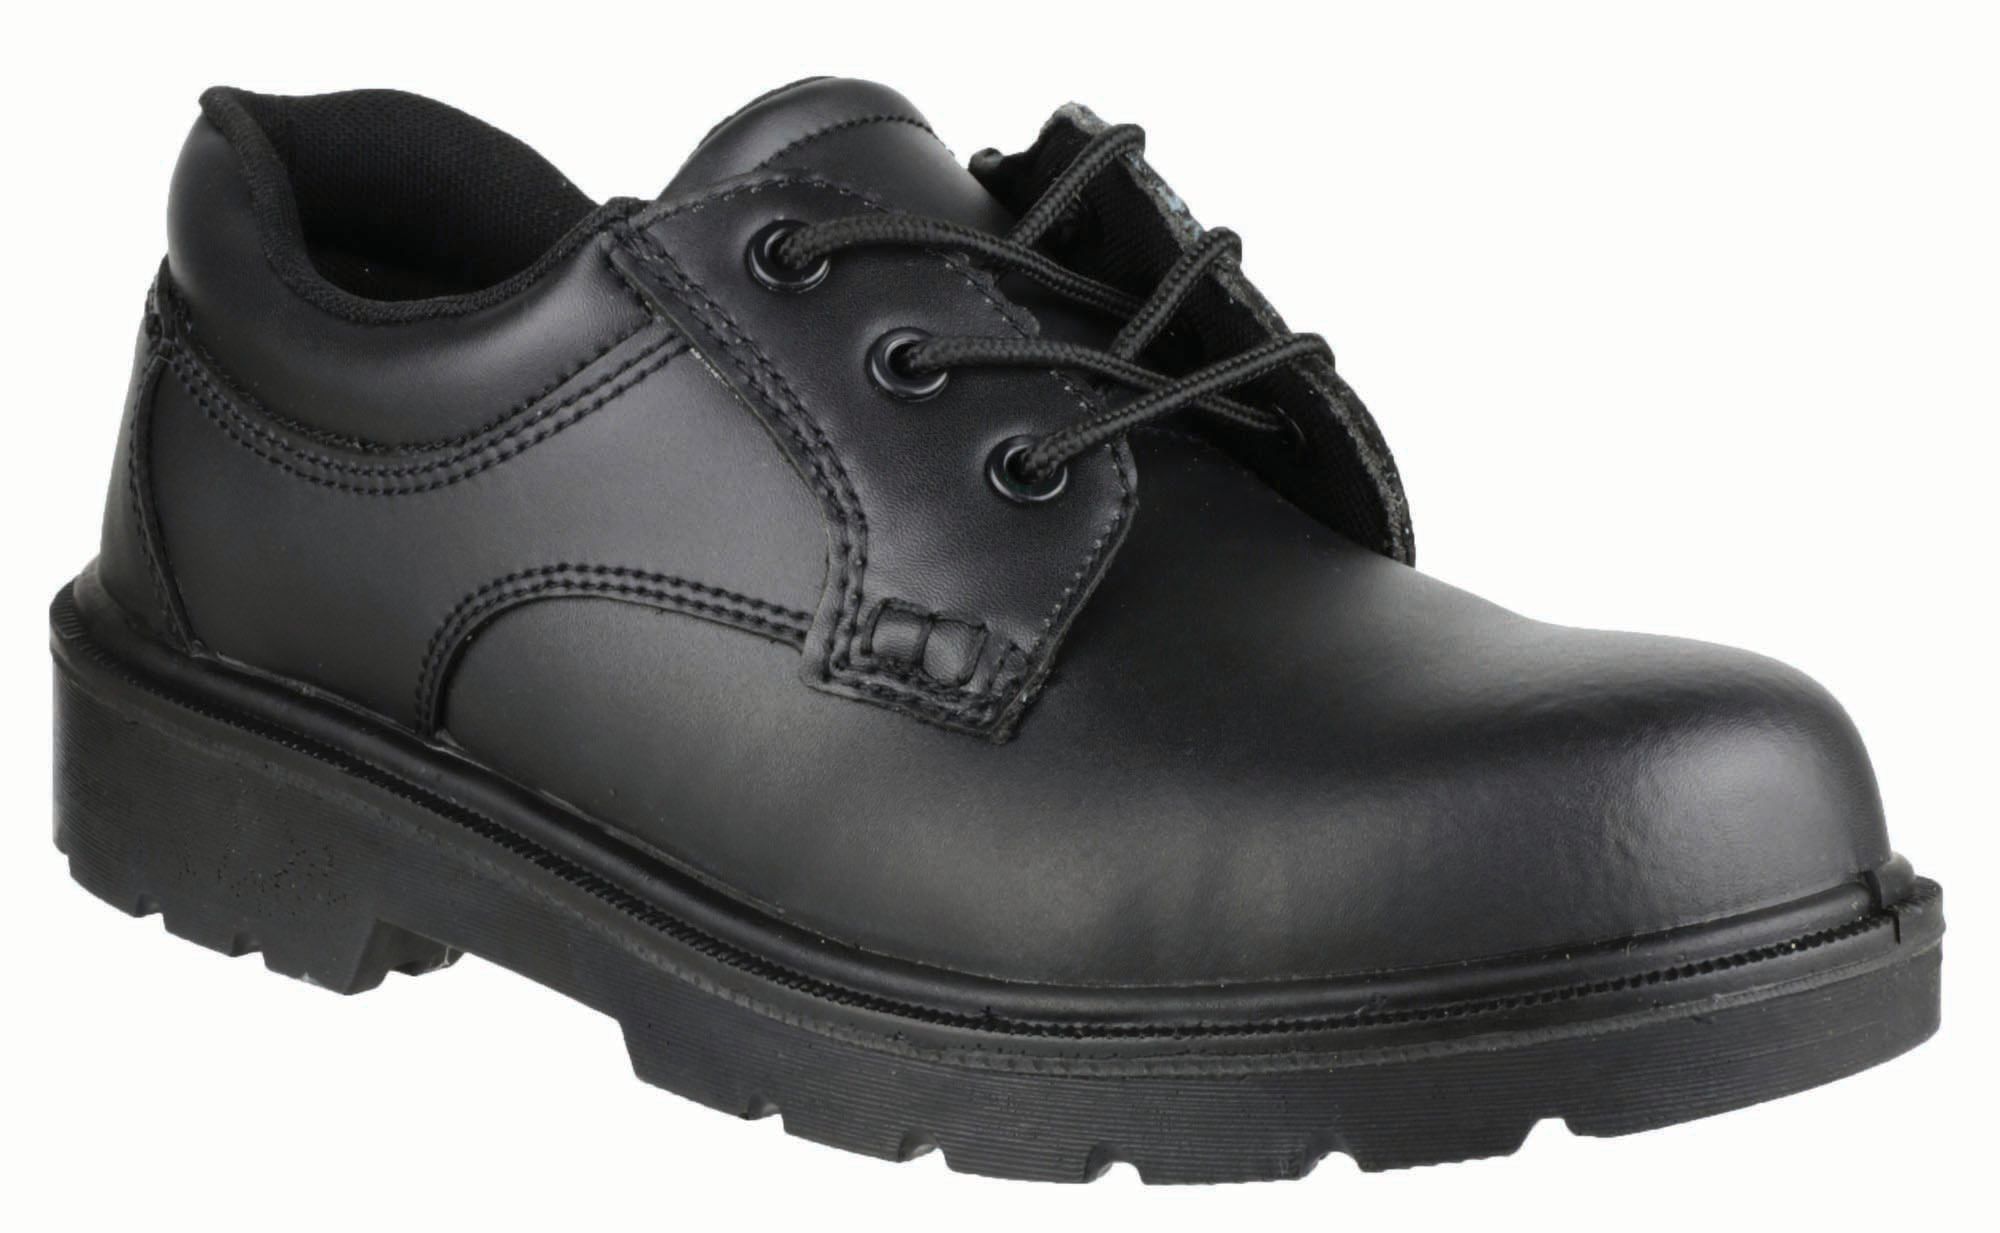 Image of Amblers Safety FS38C Safety Shoe - Black Size 7